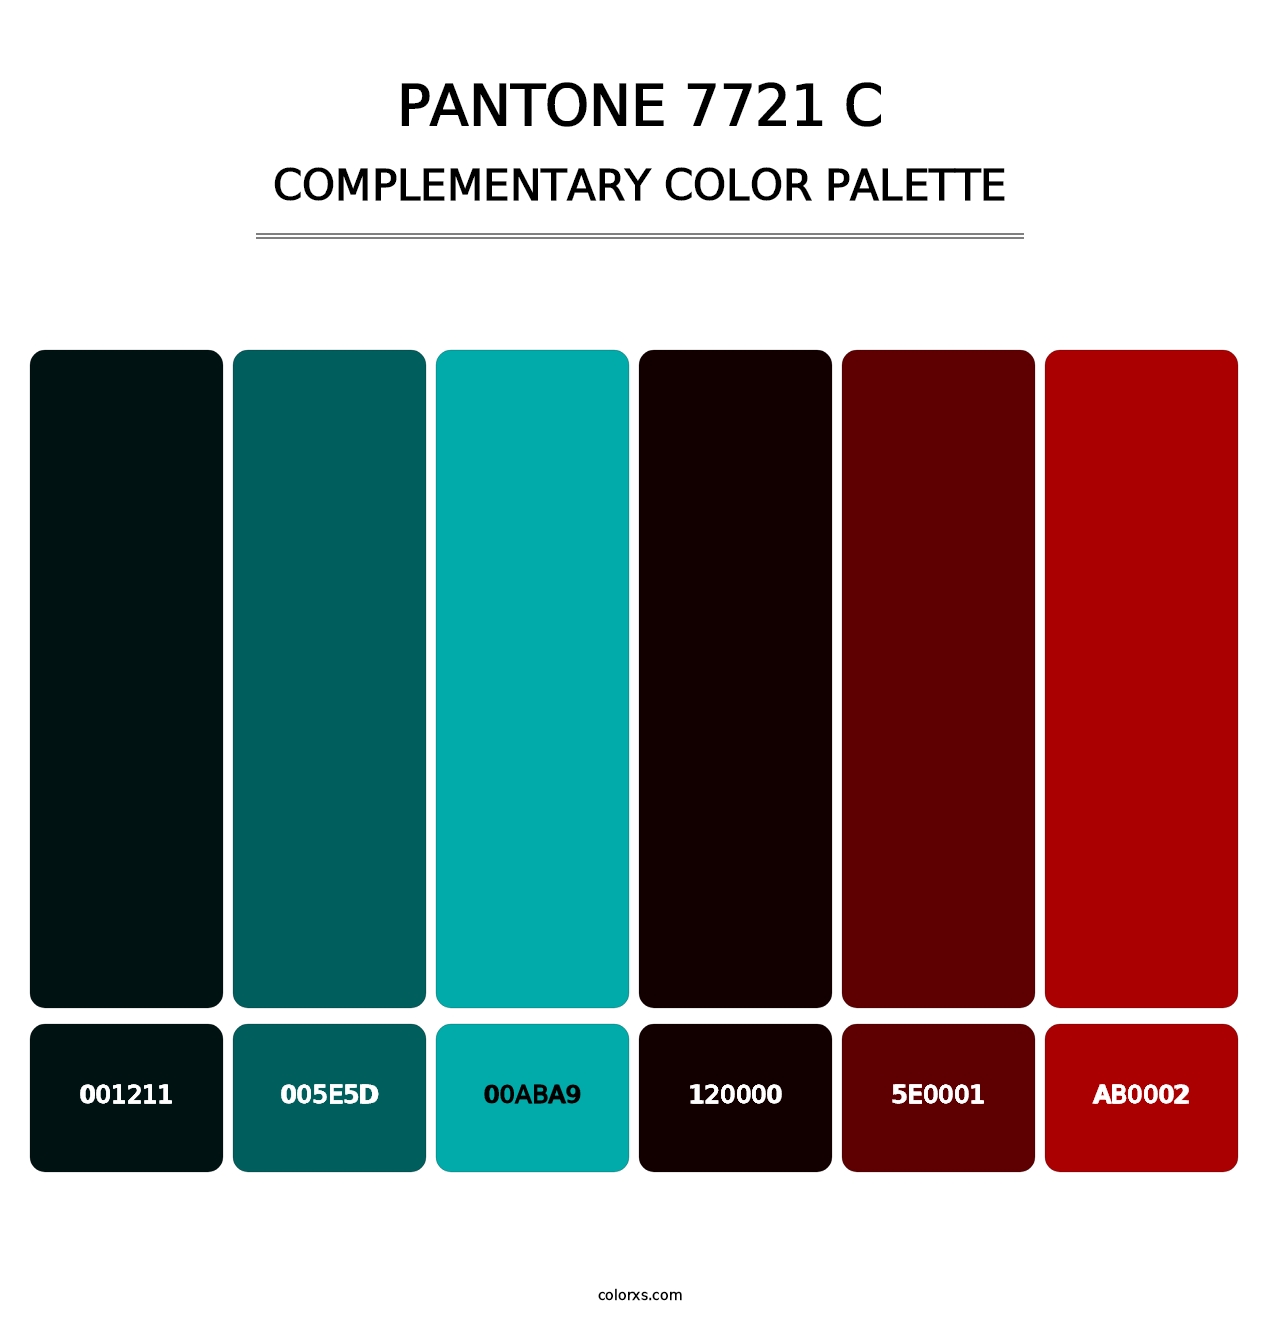 PANTONE 7721 C - Complementary Color Palette